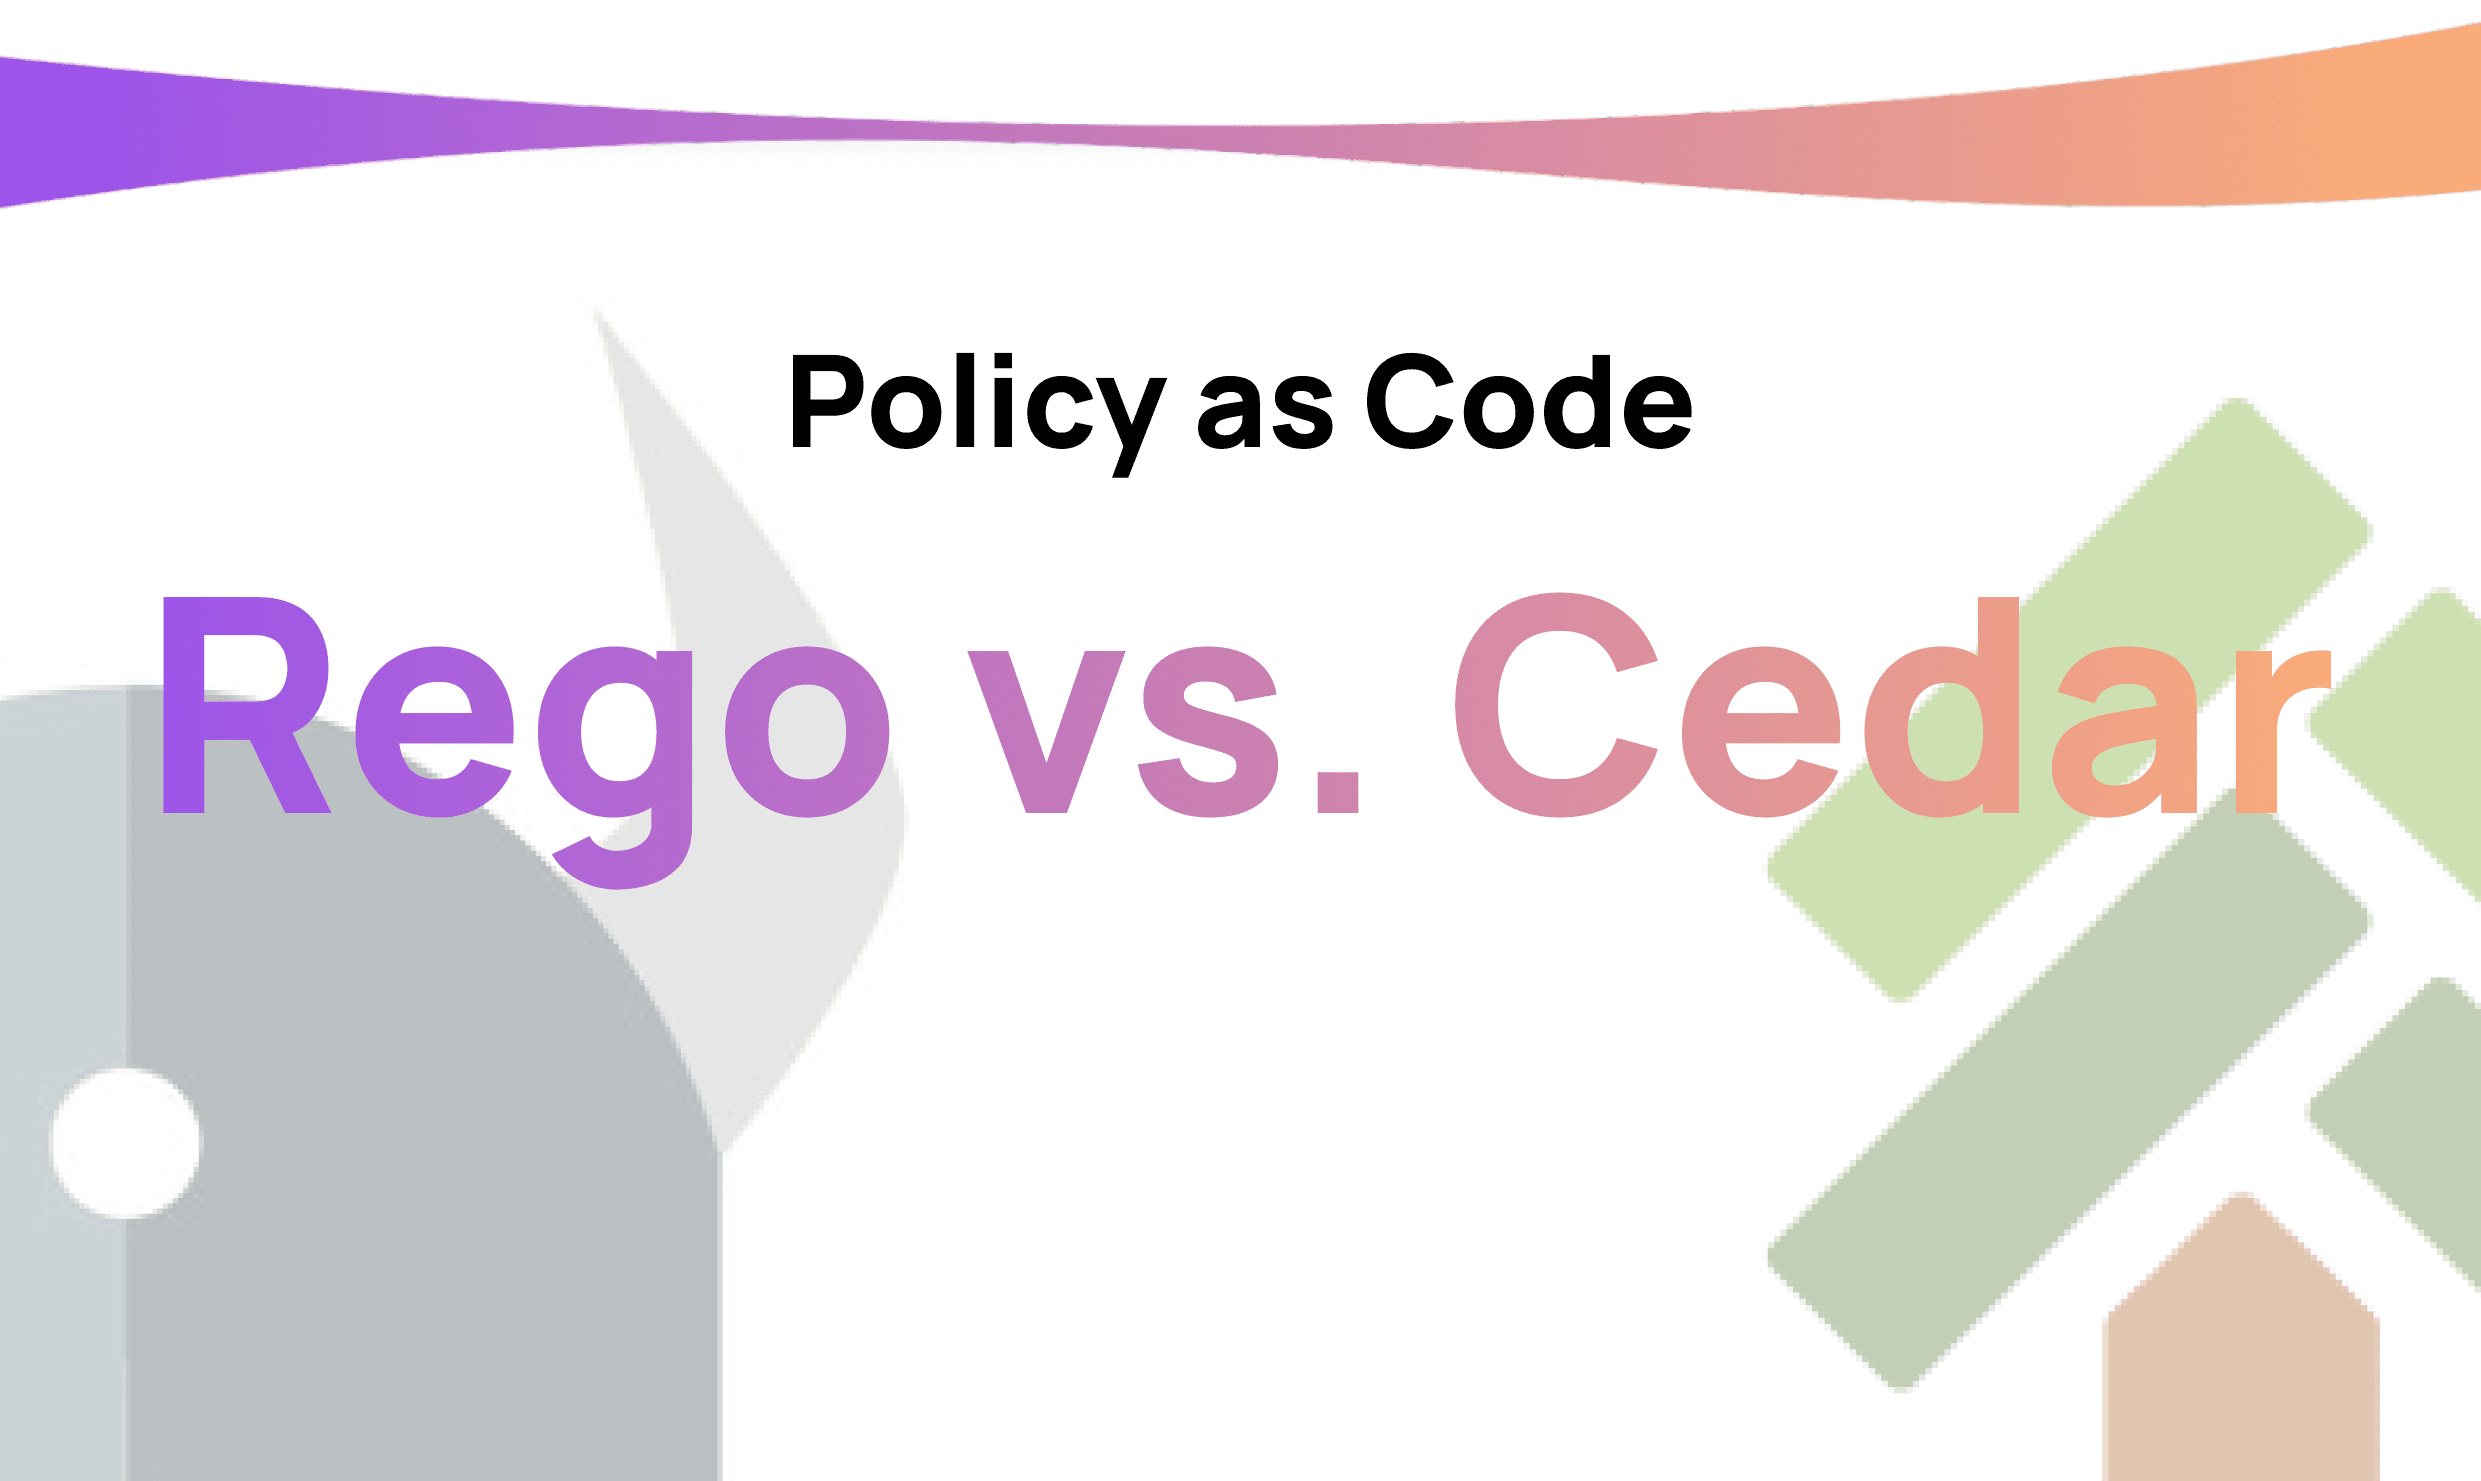 Policy as Code: OPA's Rego vs. Cedar